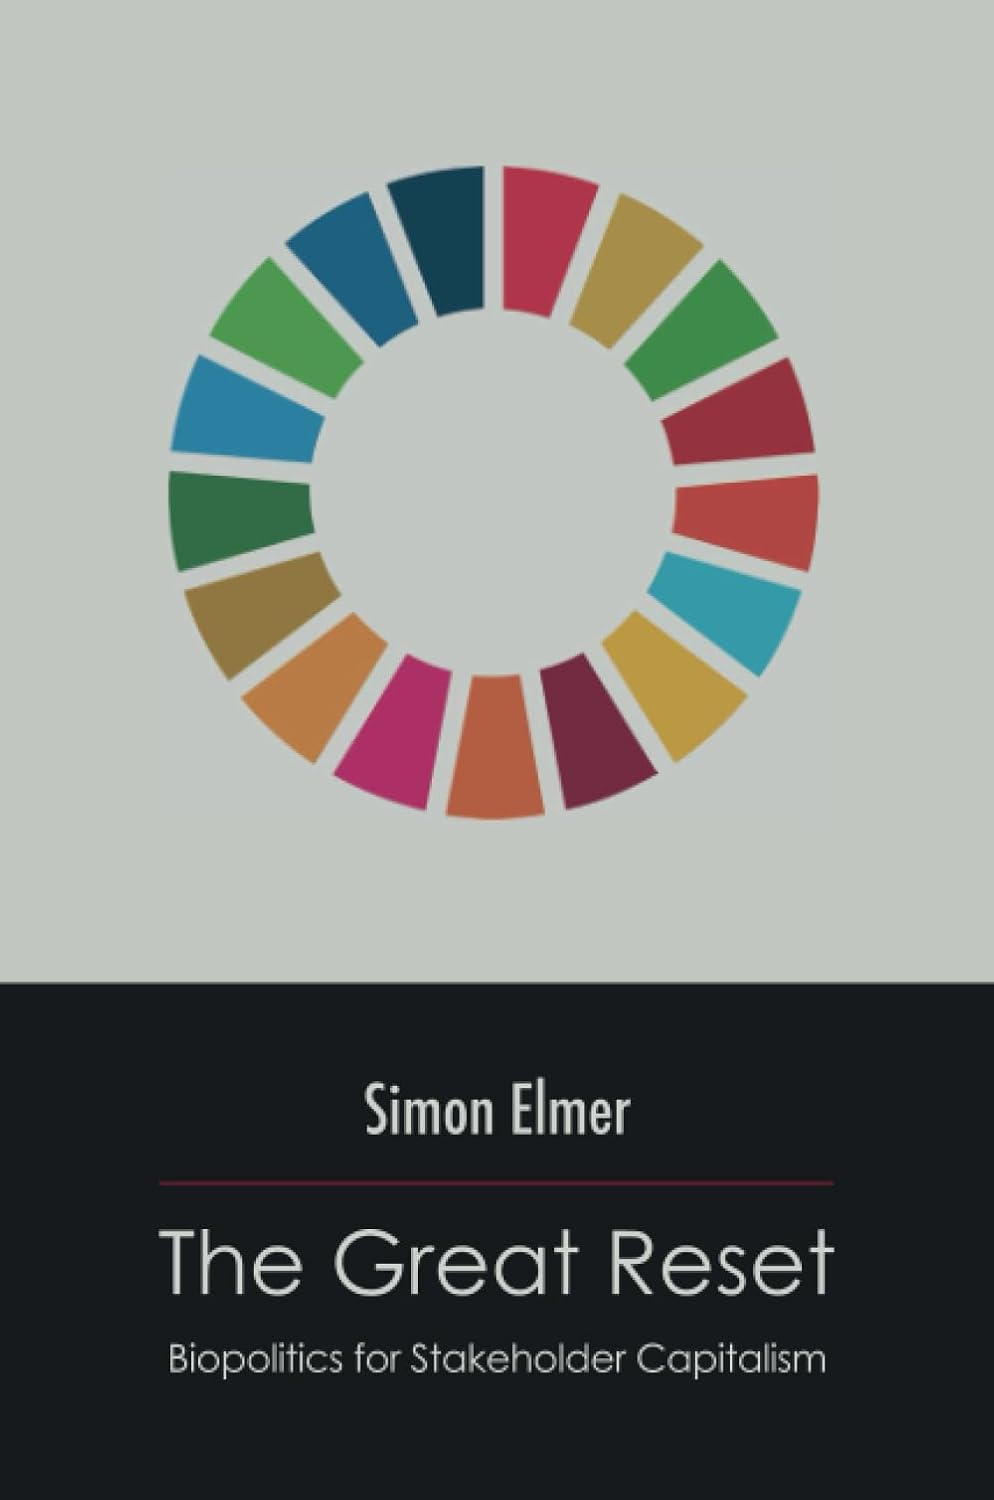 Simon Elmer – The Great Reset